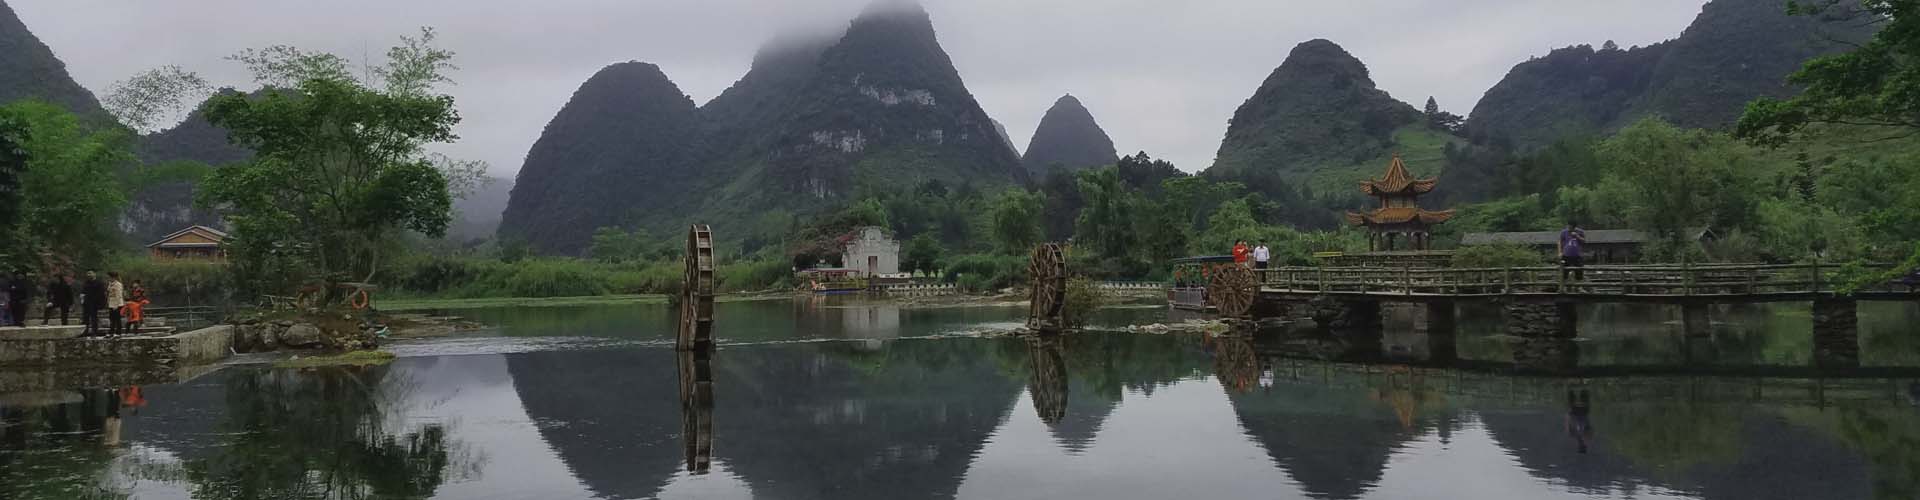 Vieux village Equan à Jingxi